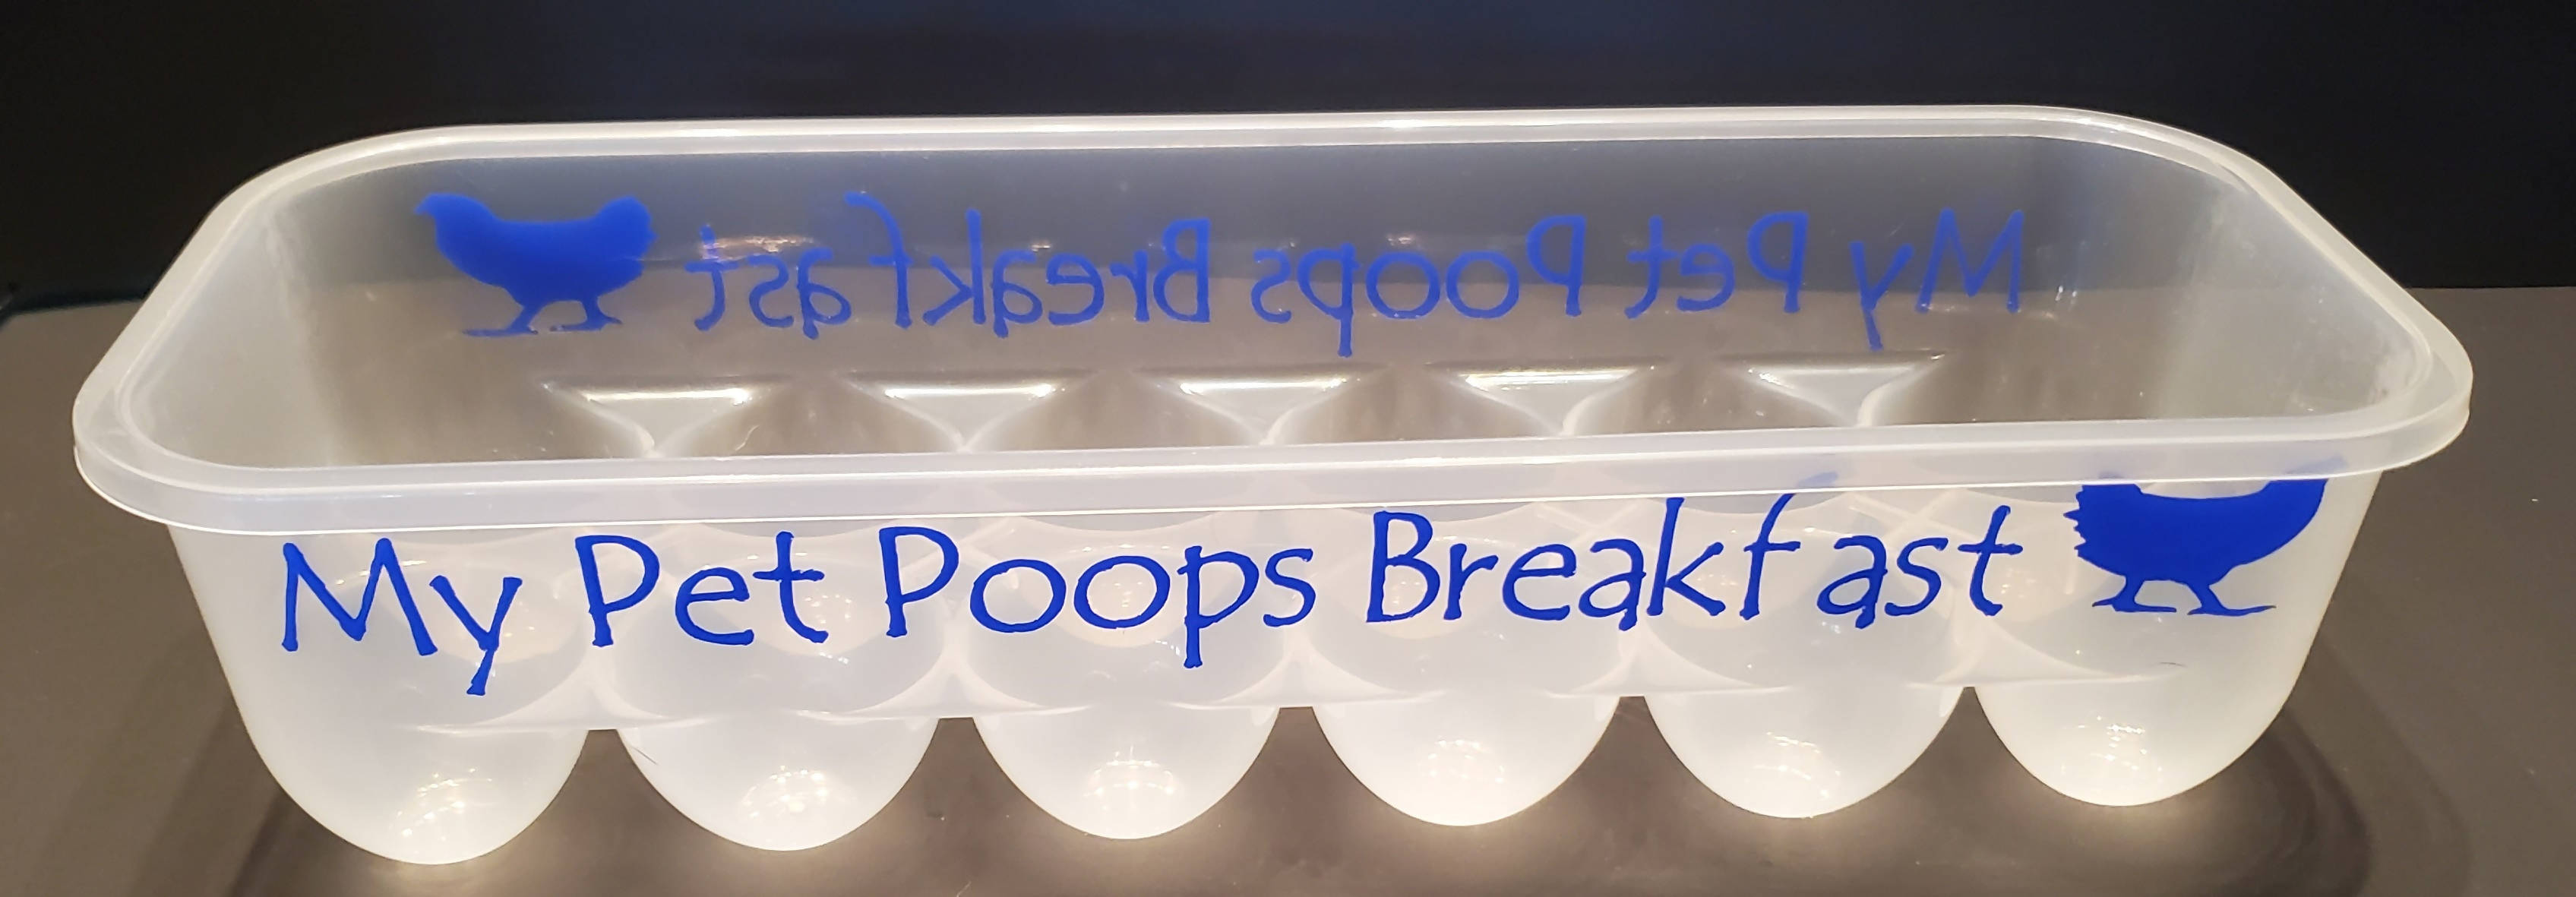 Egg Carton - My Pet Poops Breakfast